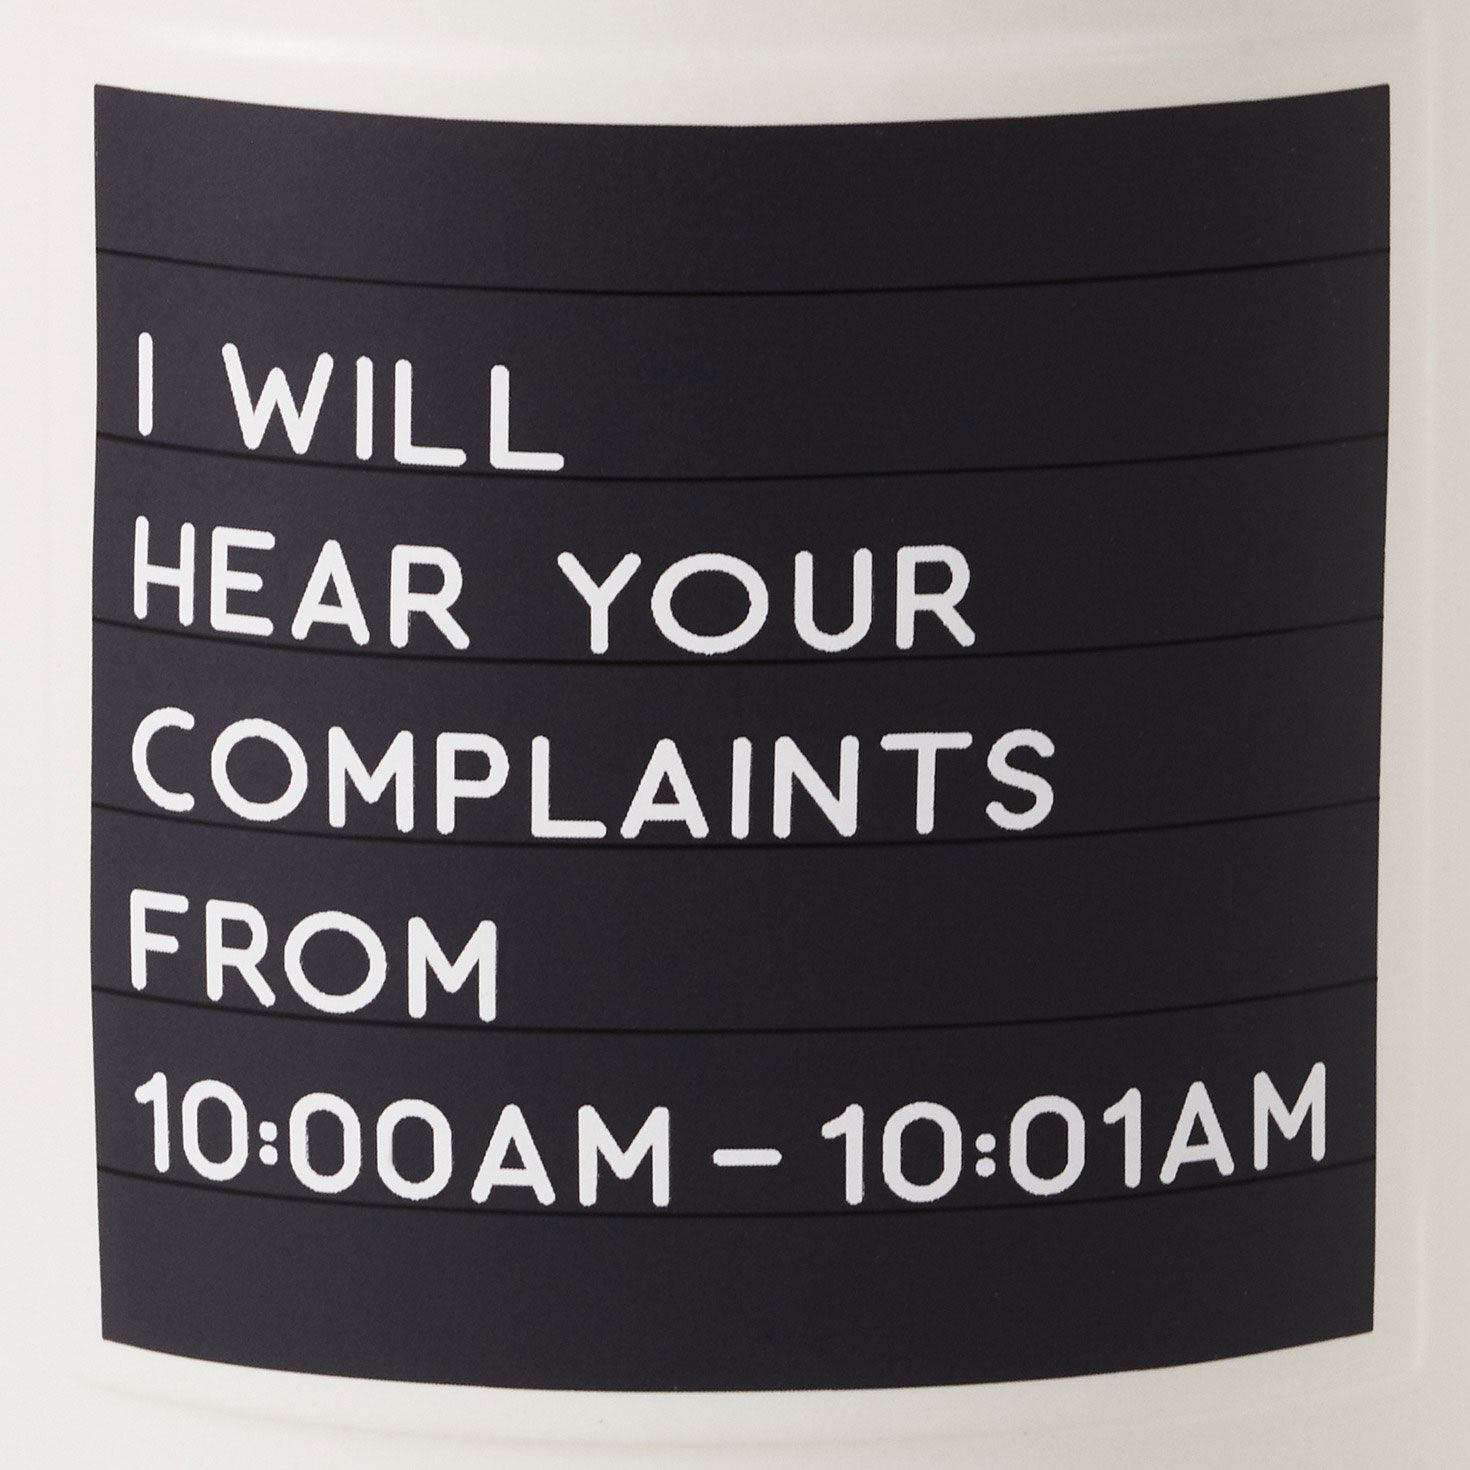 Complaints Funny Mug, 16 oz. for only USD 16.99 | Hallmark